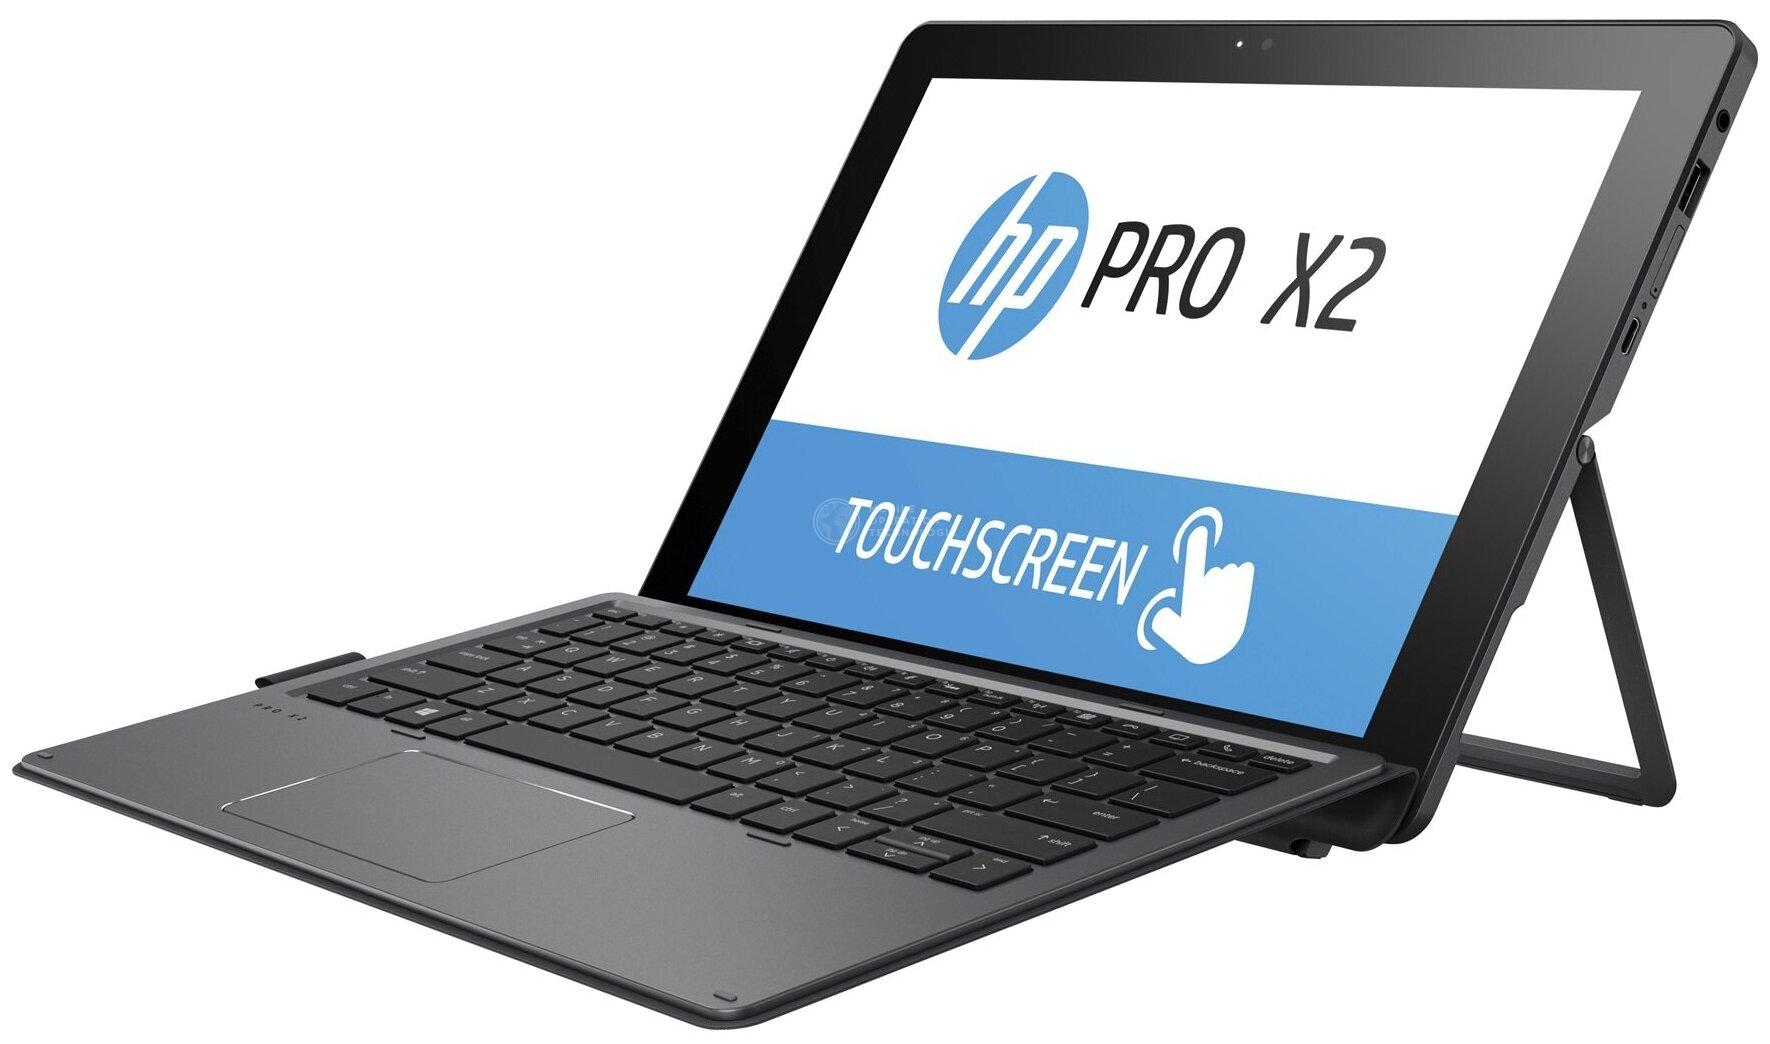 HP Pro x2 612 G2 i5